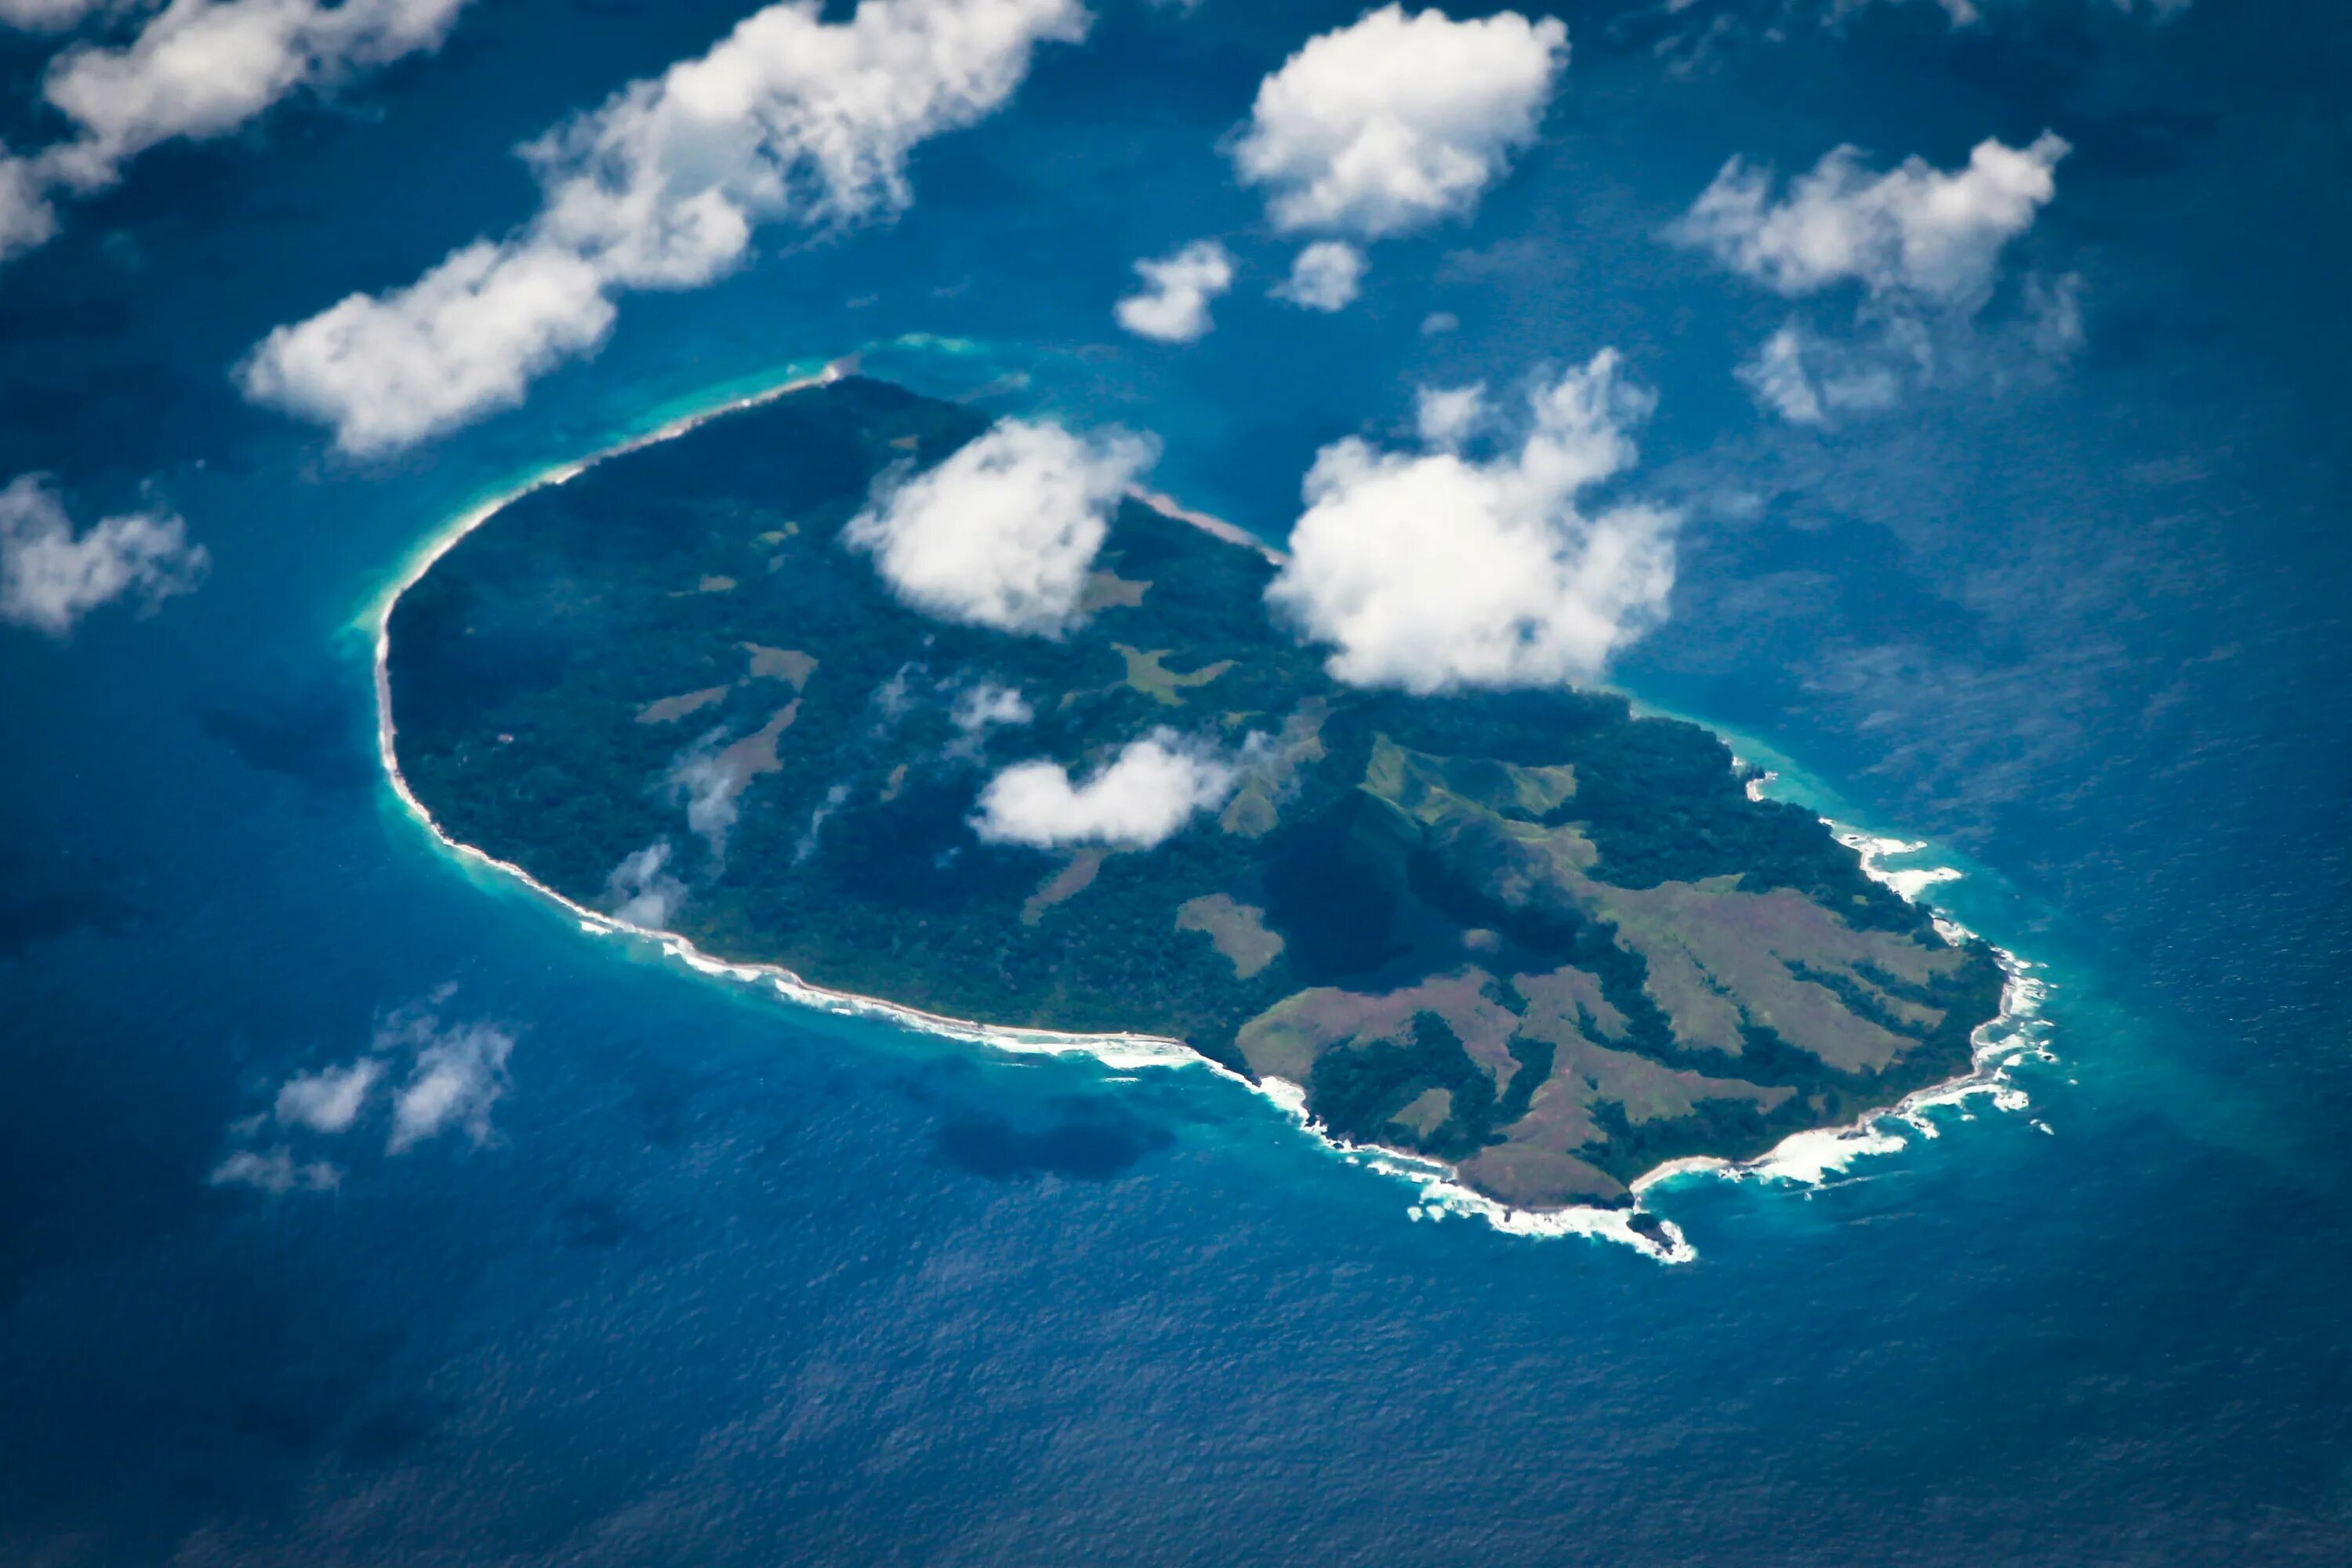 Two large islands. Андаманские острова. Никобарские острова. Никобарские острова острова Индии. Андаманы Индия.